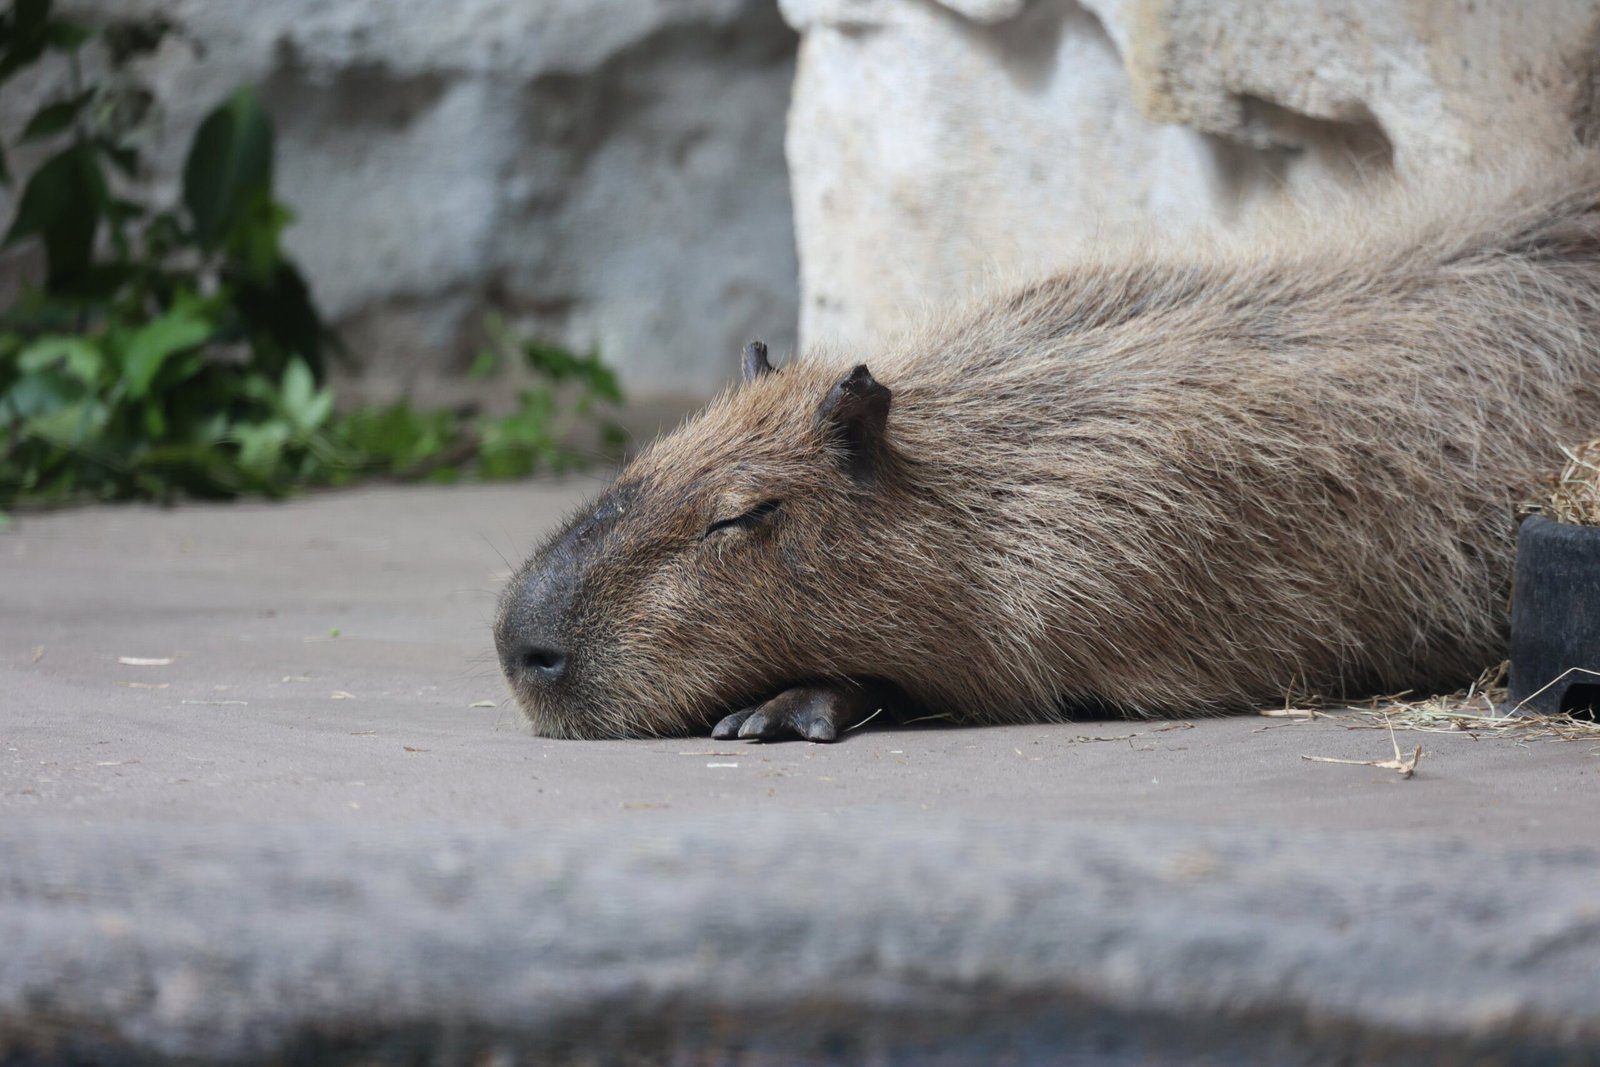 The Classy Capybara: A Top Hat Sensation